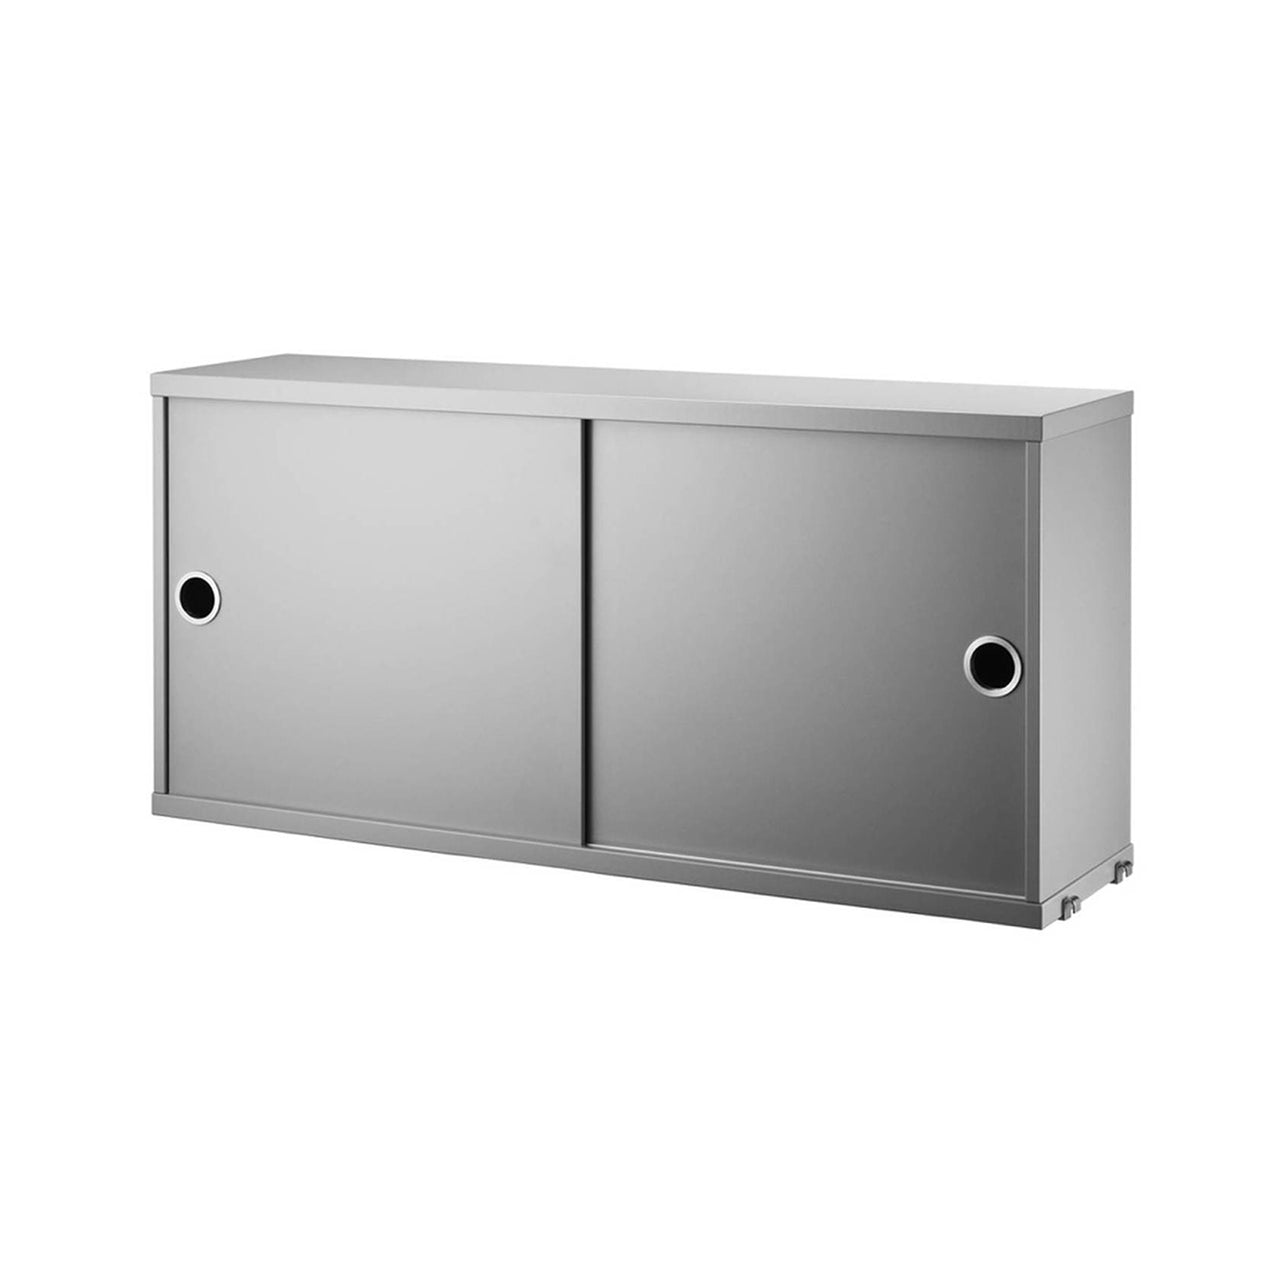 Large Stackable Vertical Art Storage Cabinet, Steel Cabinets, Storage &  Handling Equipment